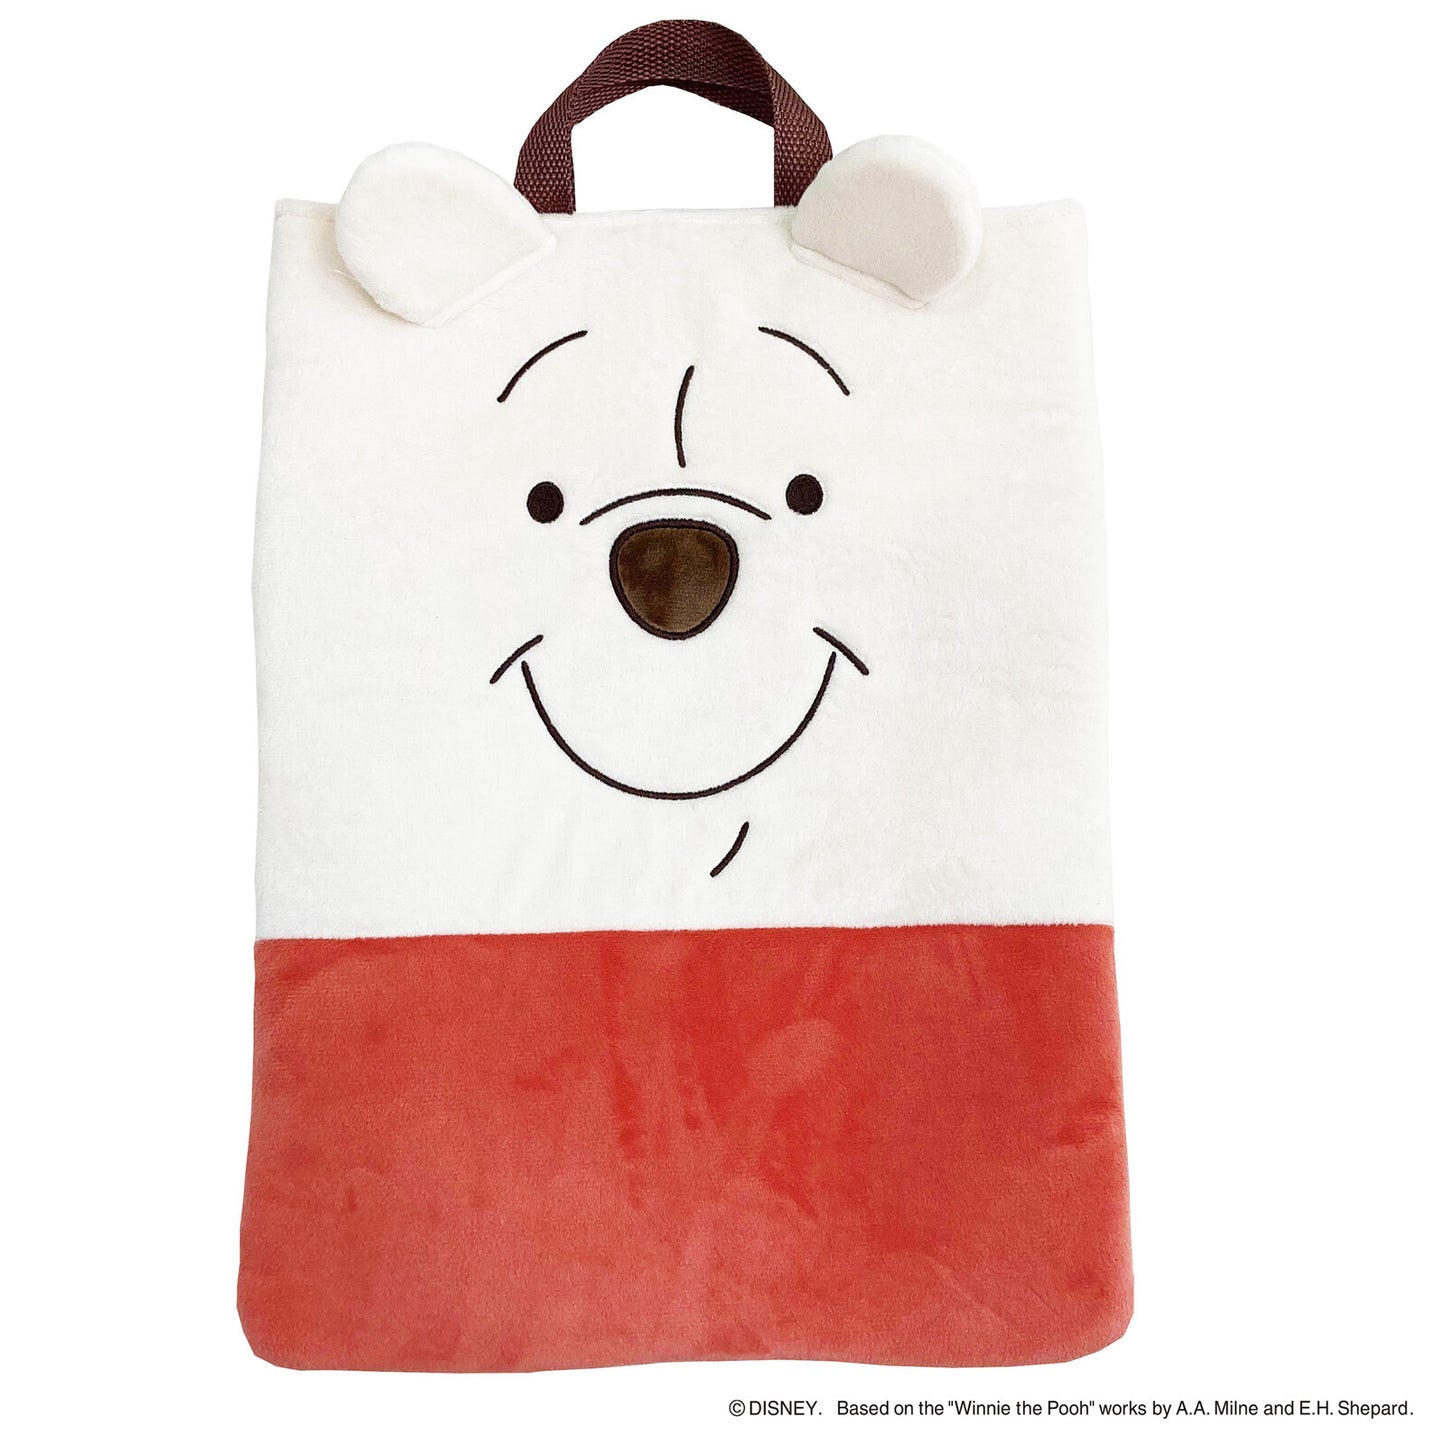  Winnie the Pooh multi-purpose storage bag 